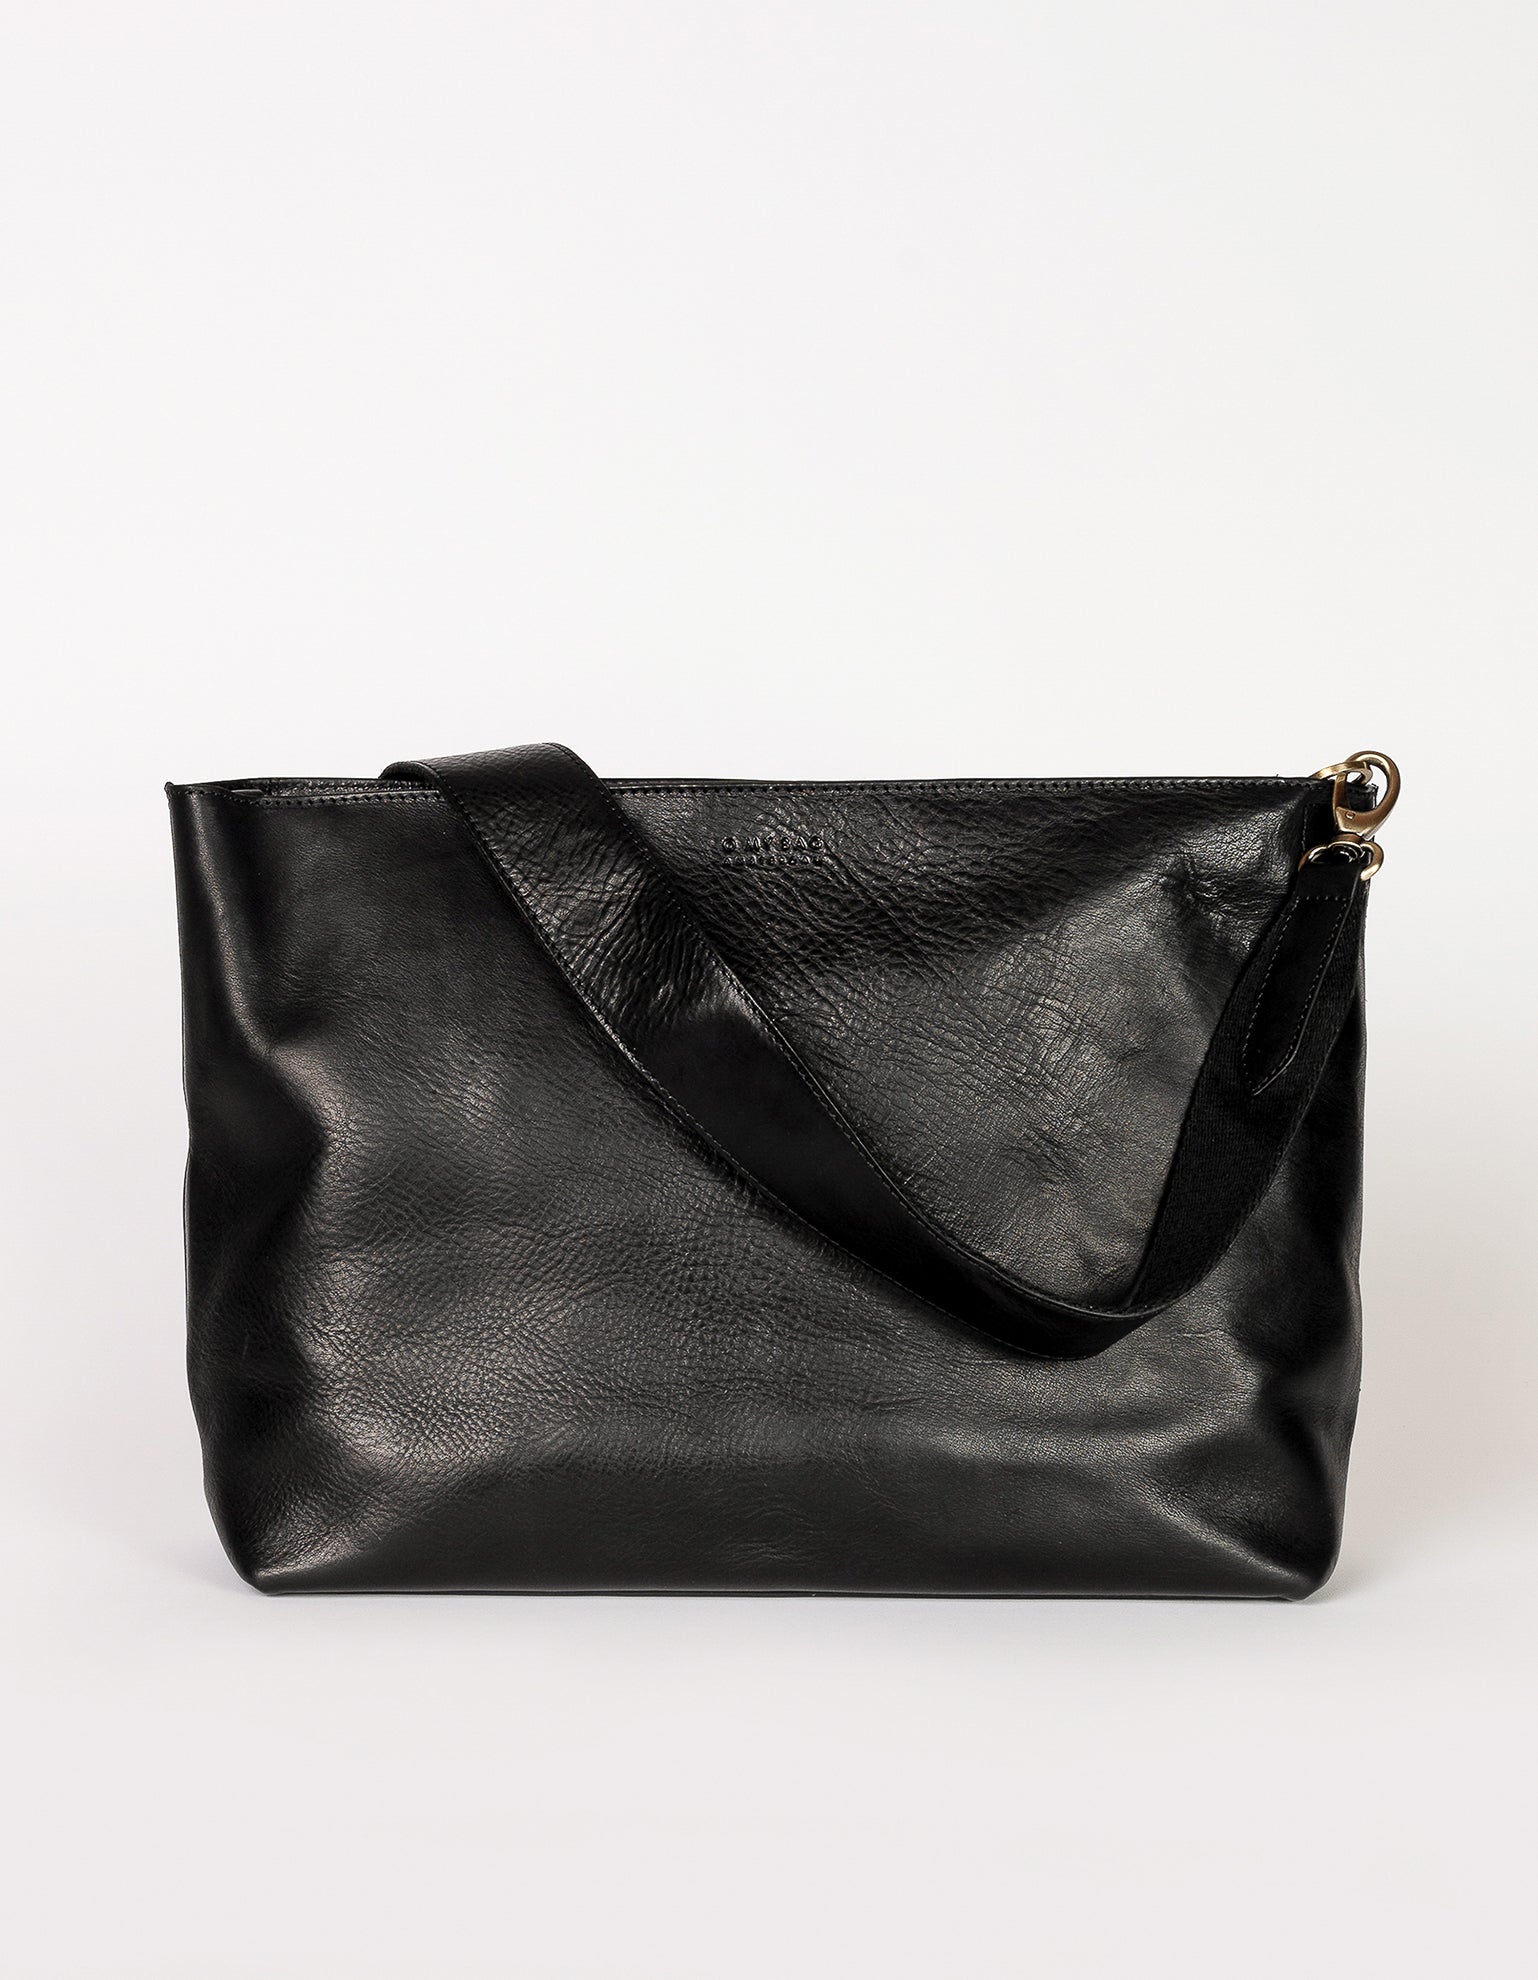 Olivia Cross-Body | Stromboli Leather